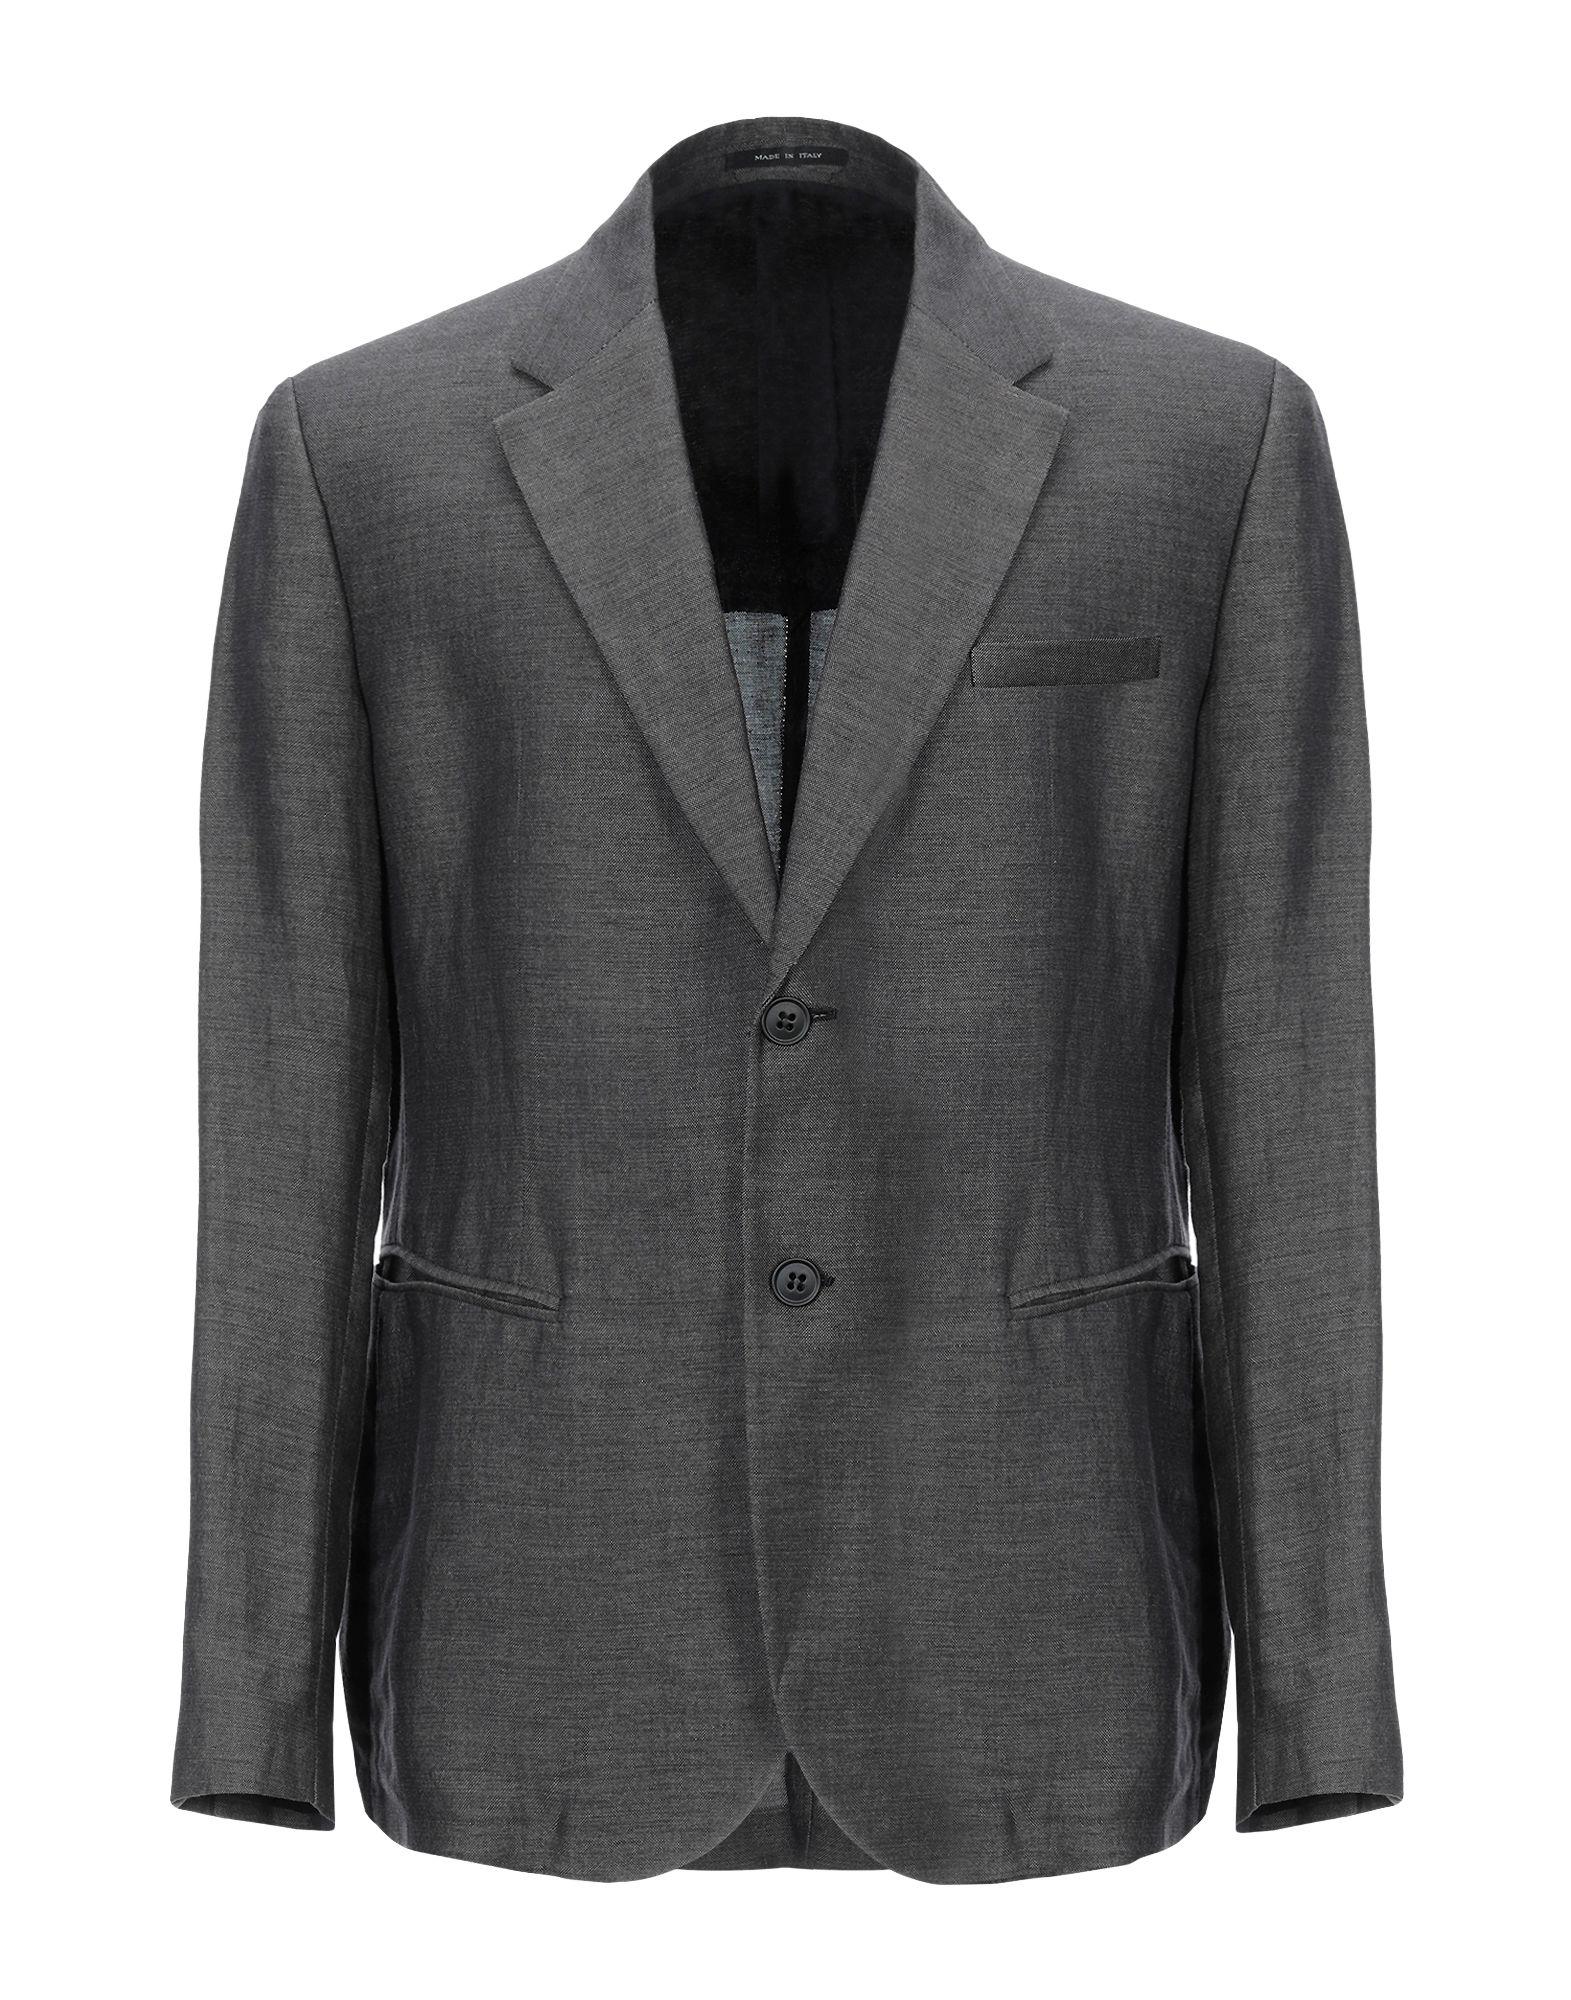 Emporio Armani Linen Suit Jacket in Steel Grey (Gray) for Men - Lyst